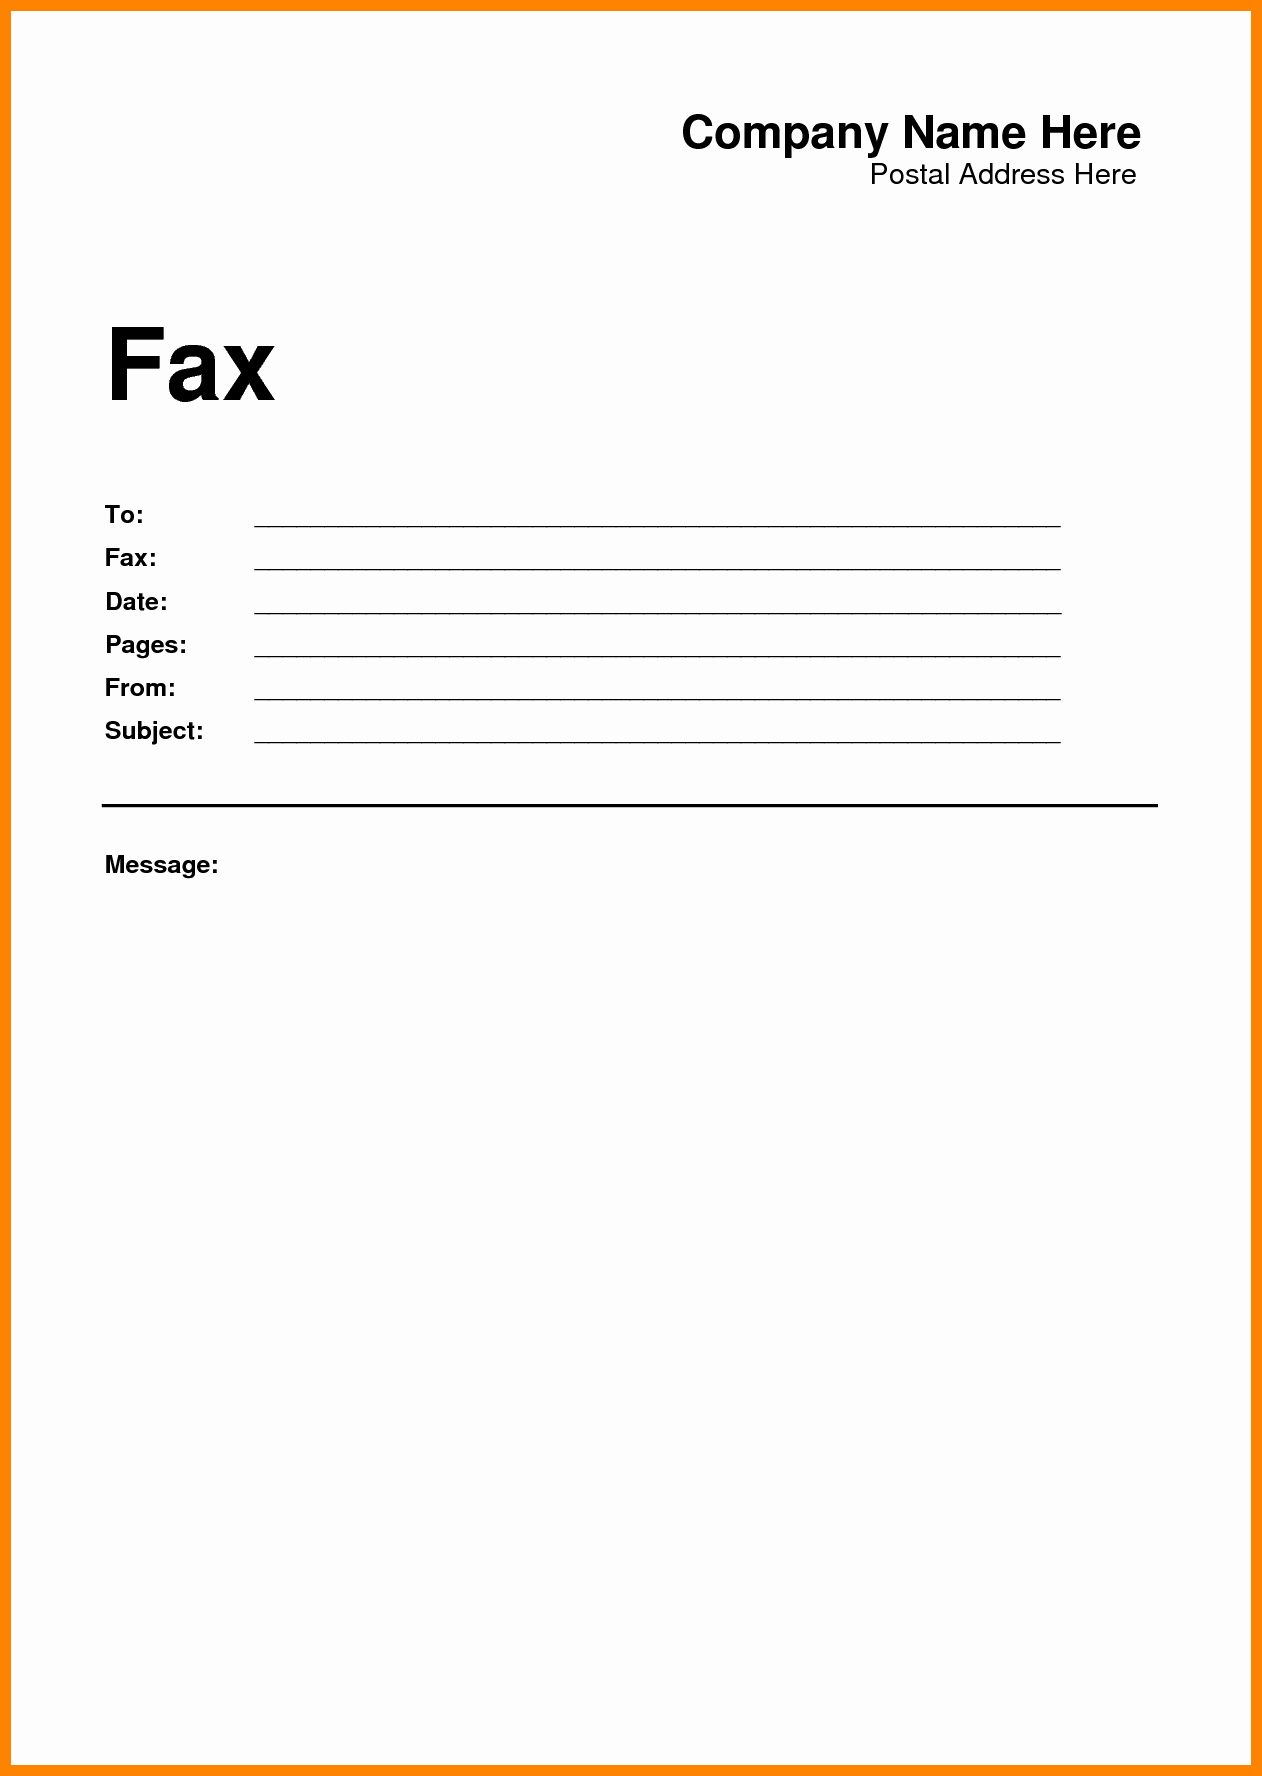 Fax Cover Sheet Download Free Beautiful 6 Free Fax Cover Sheet